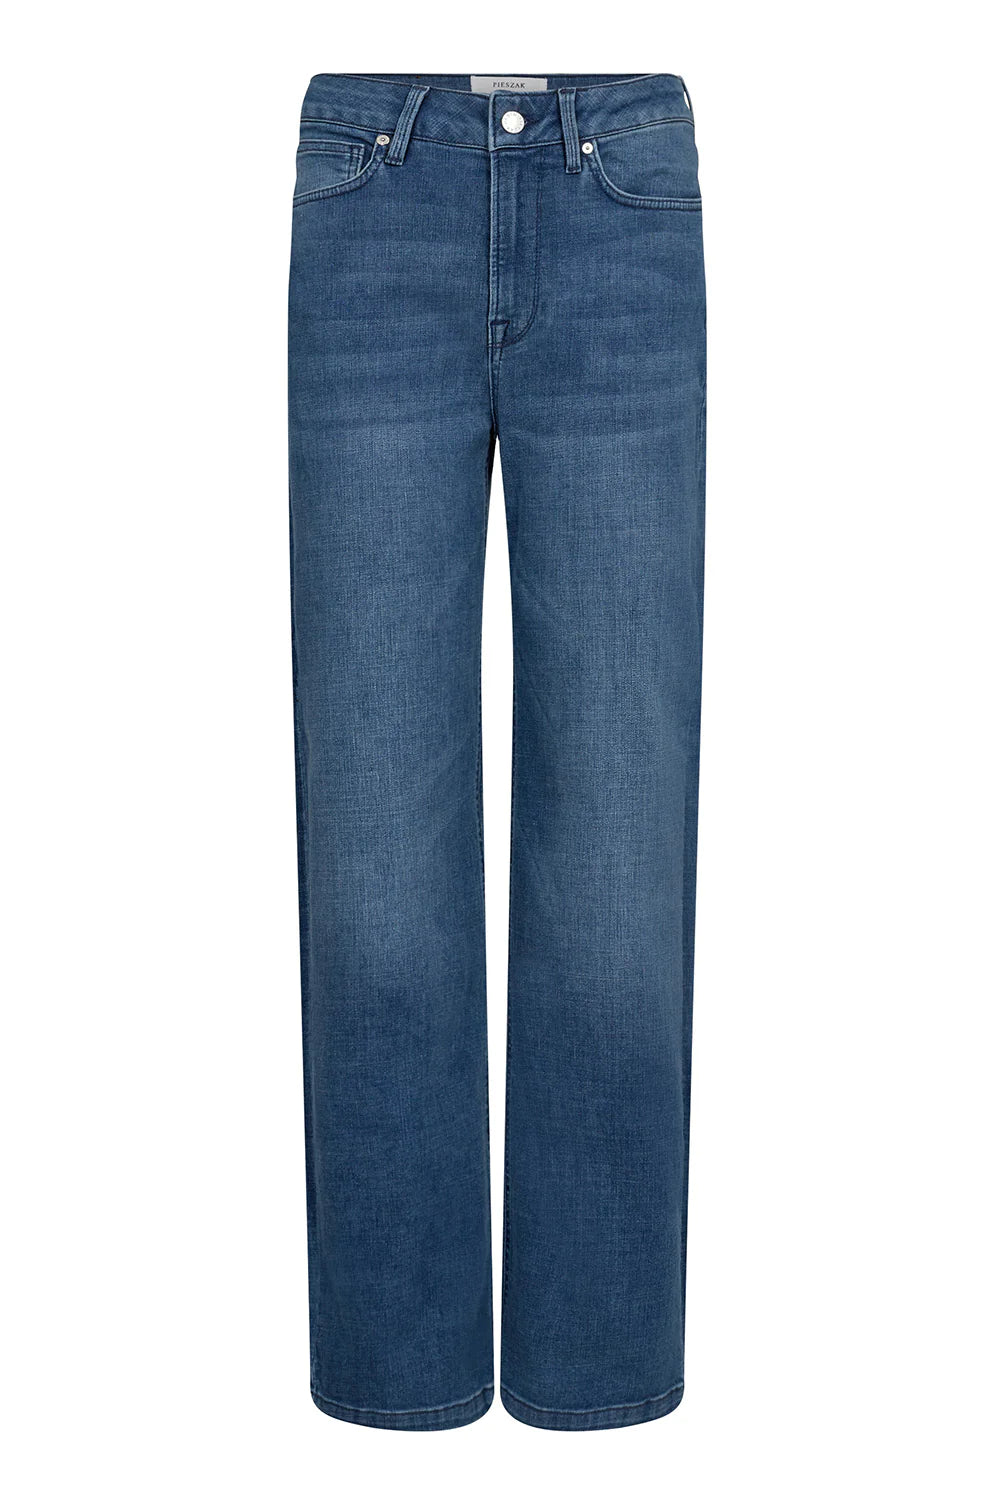 Straight leg mid blue five pocket design jeans